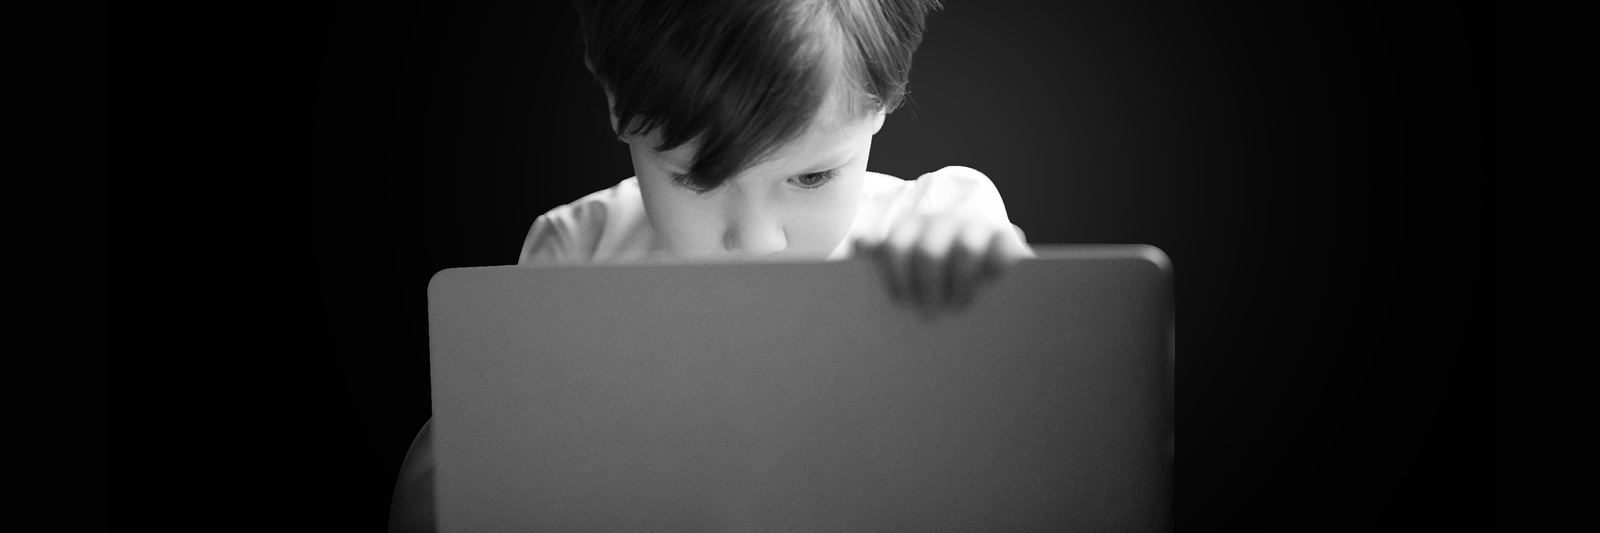 Kid Looking At Laptop